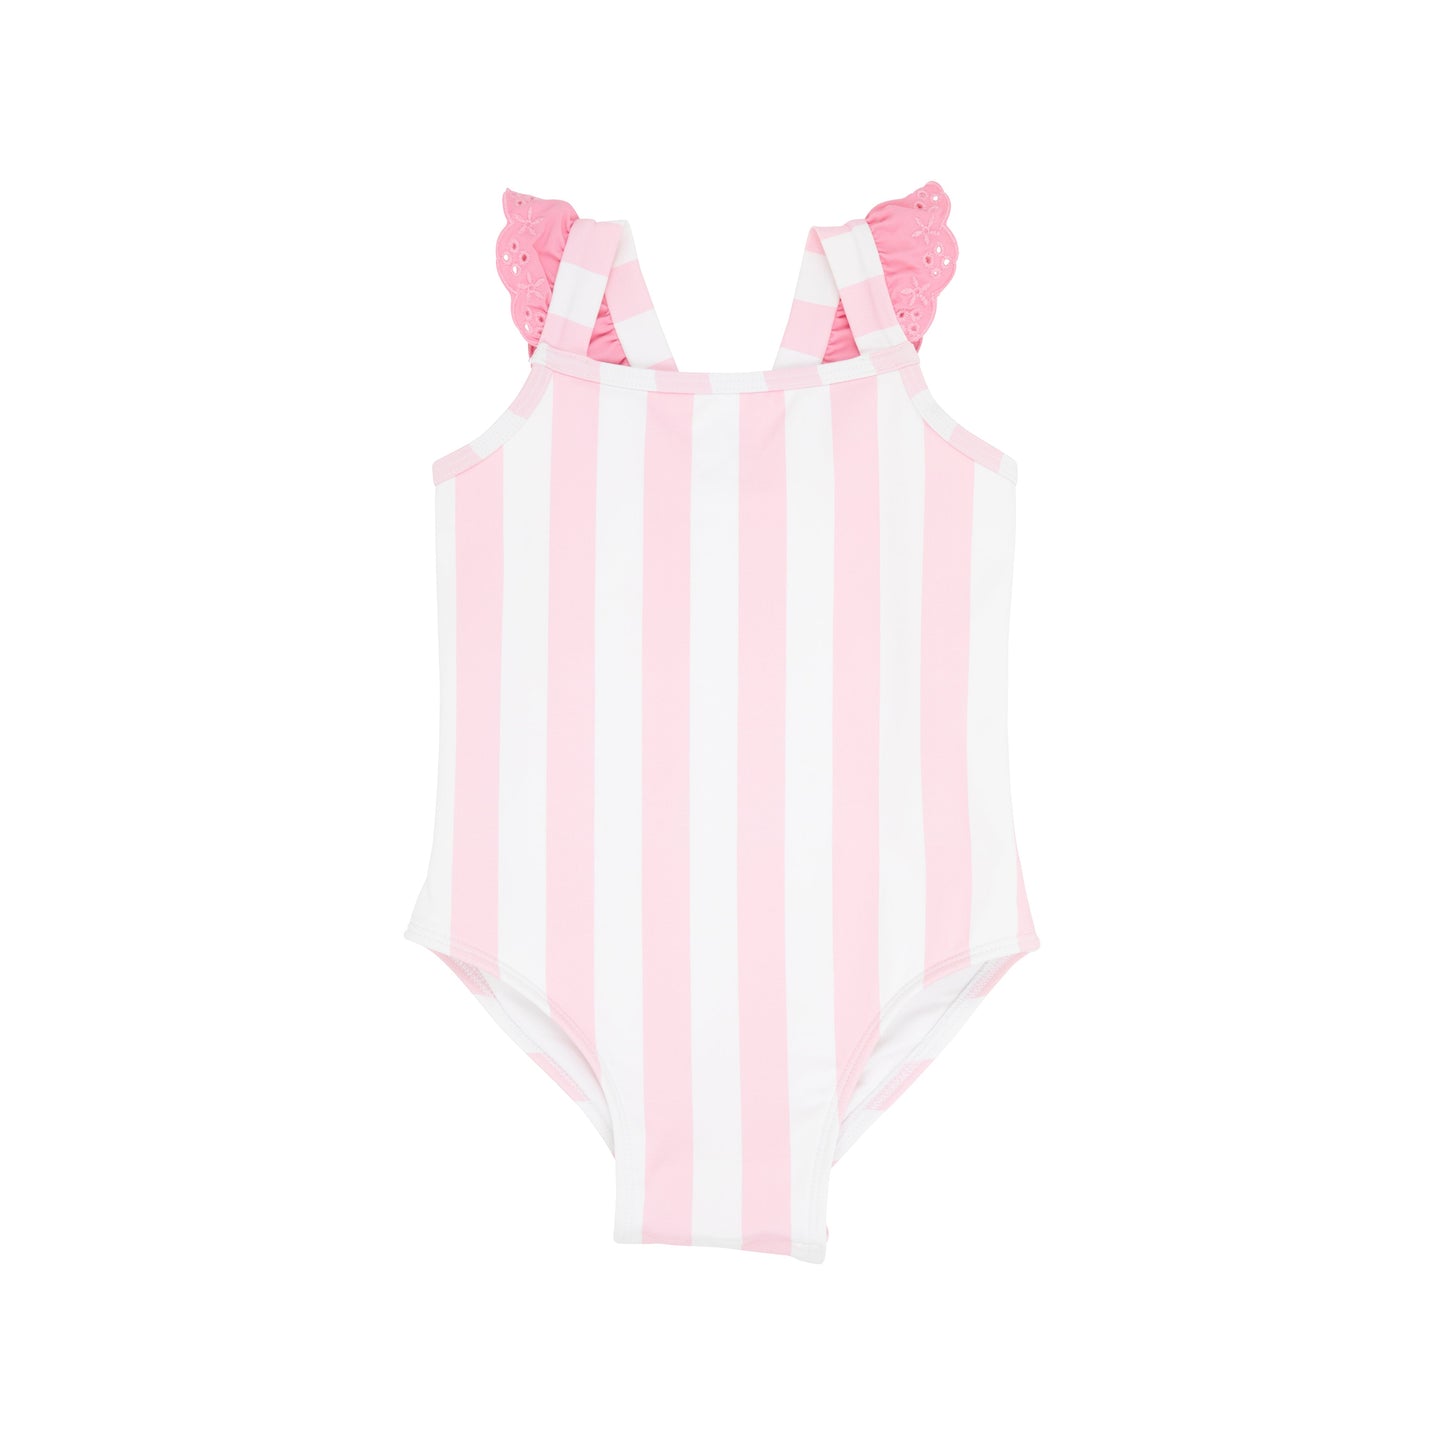 The Beaufort Bonnet - Long Bay Bathing Suit Caicos Cabana Stripe With Hamptons Hot Pink